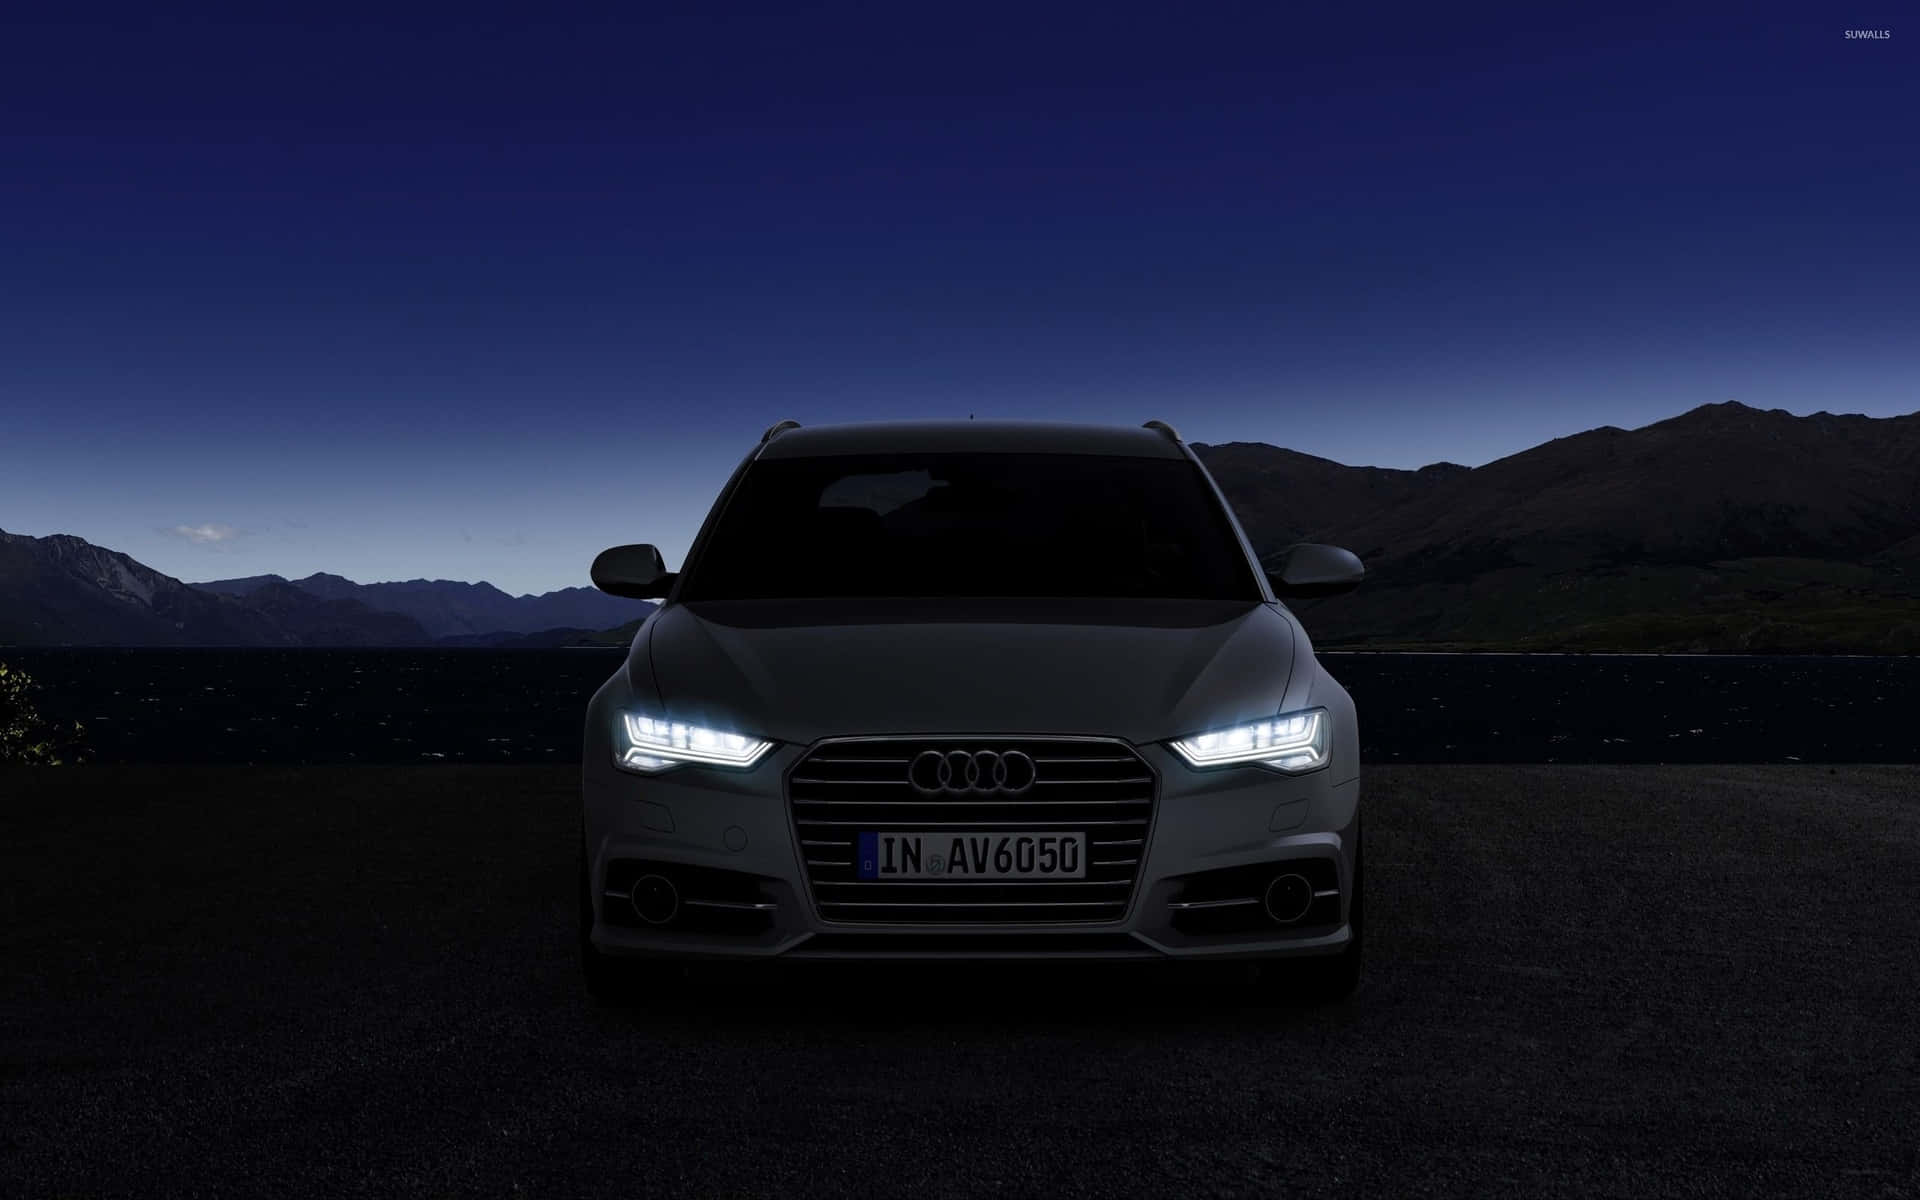 The Superior Audi S6 In Stunning Night Lights Wallpaper